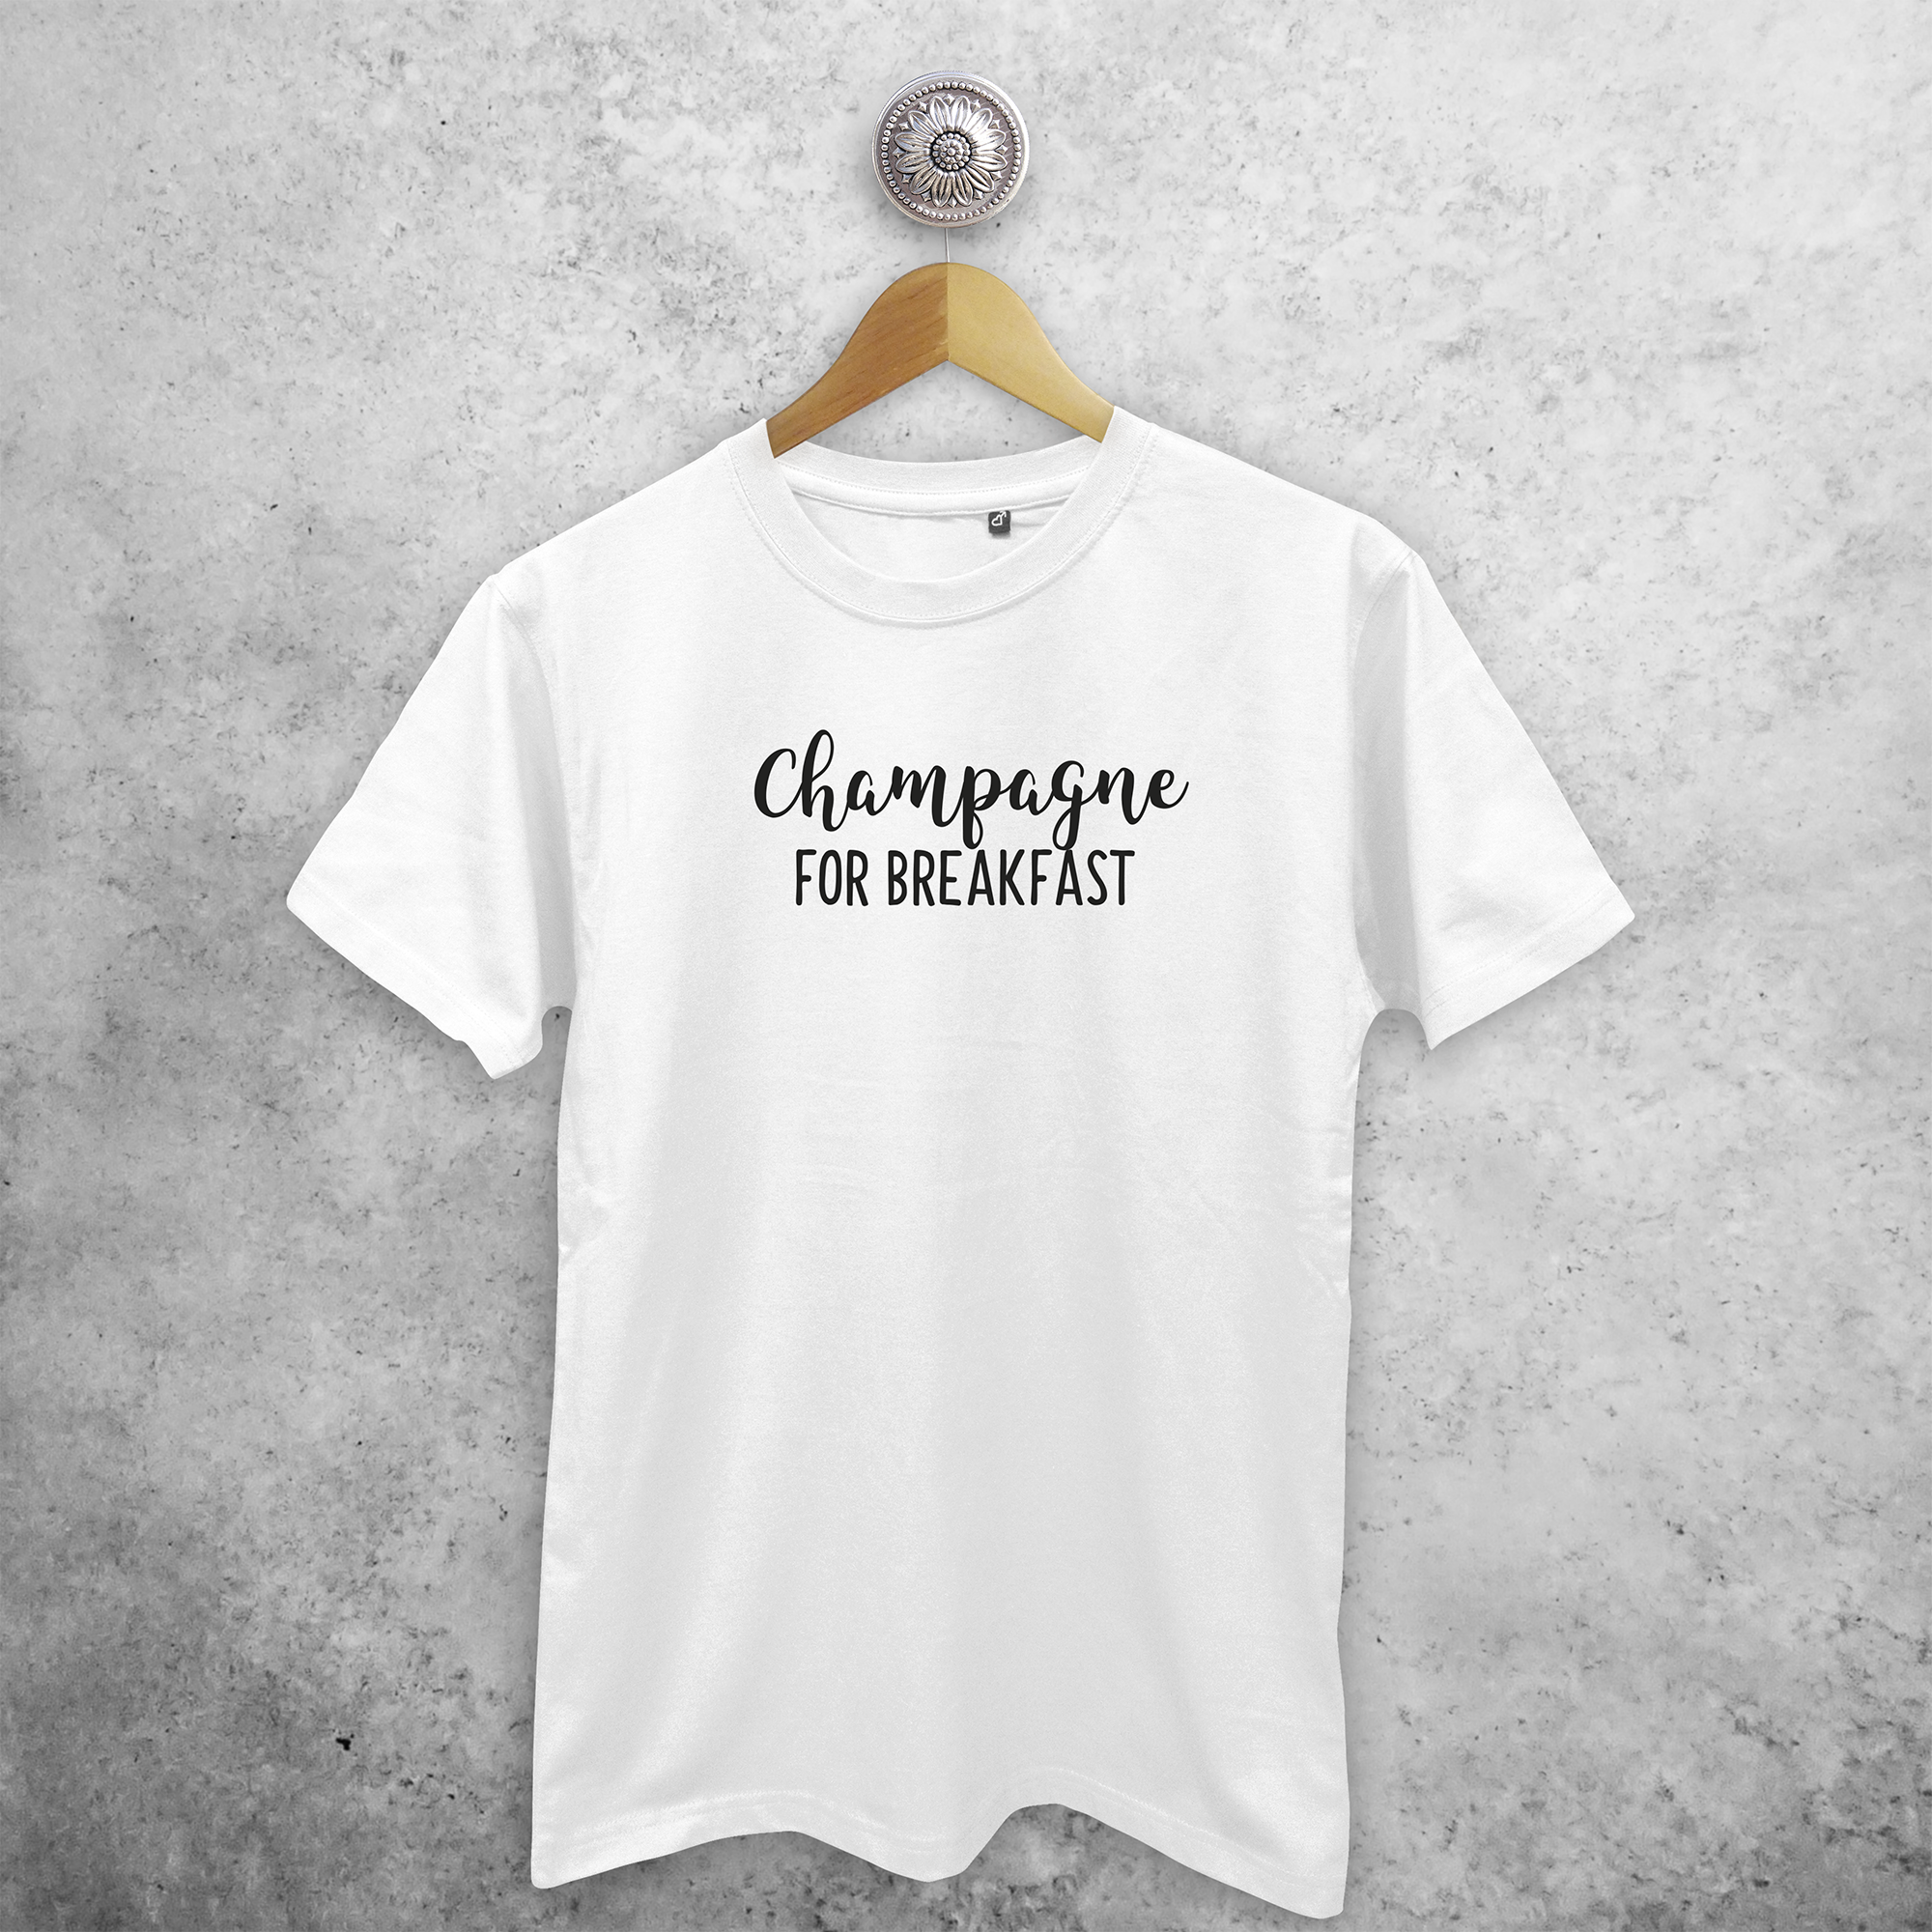 'Champagne for breakfast' volwassene shirt